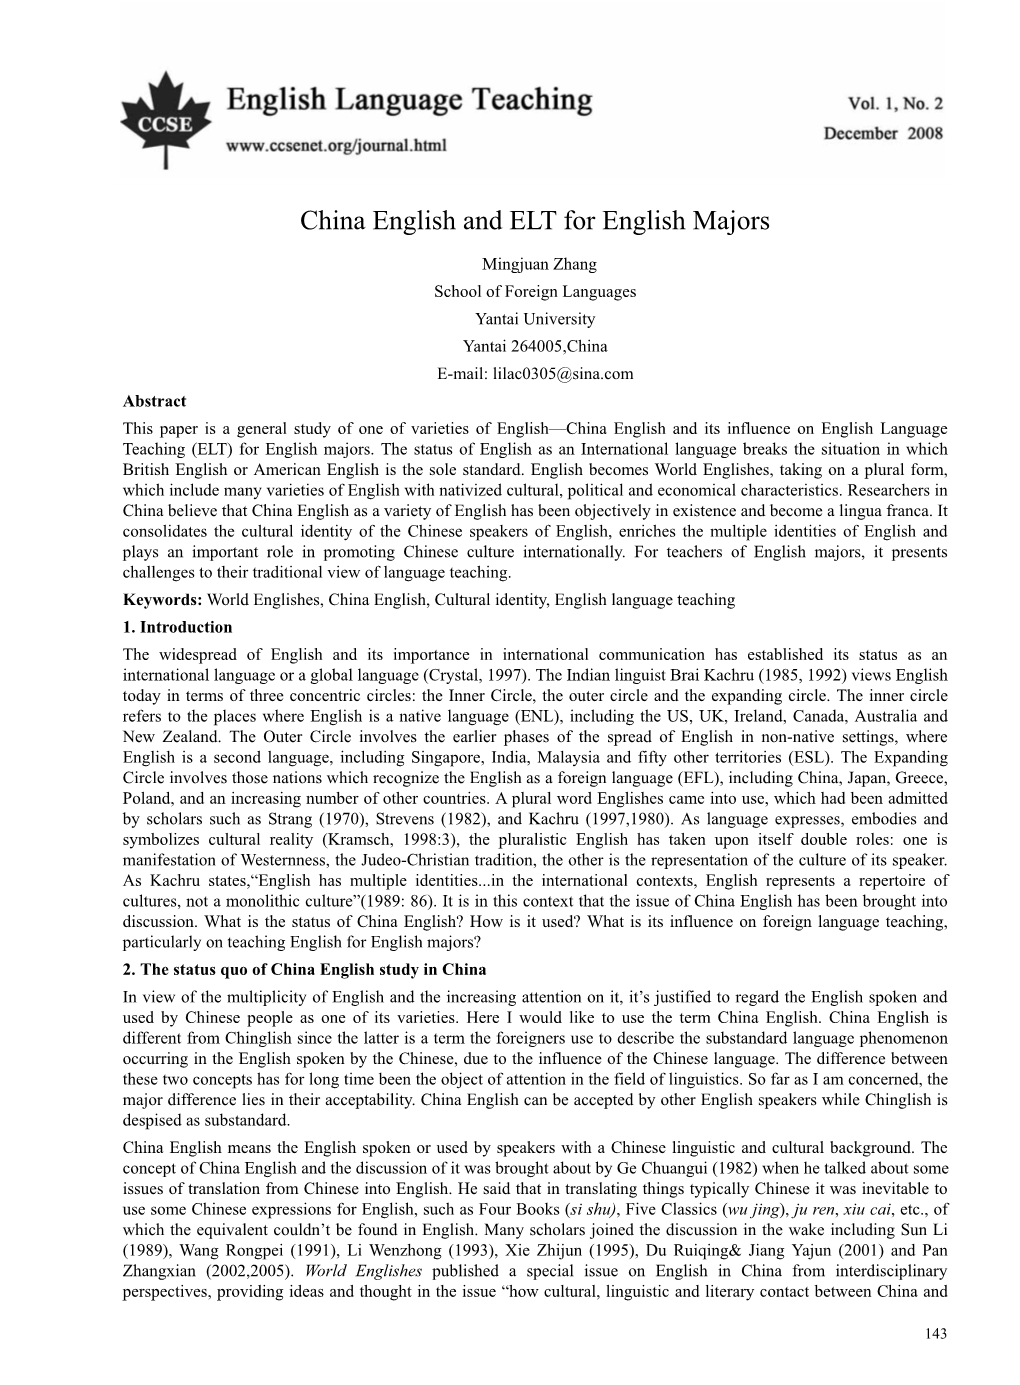 China English and ELT for English Majors